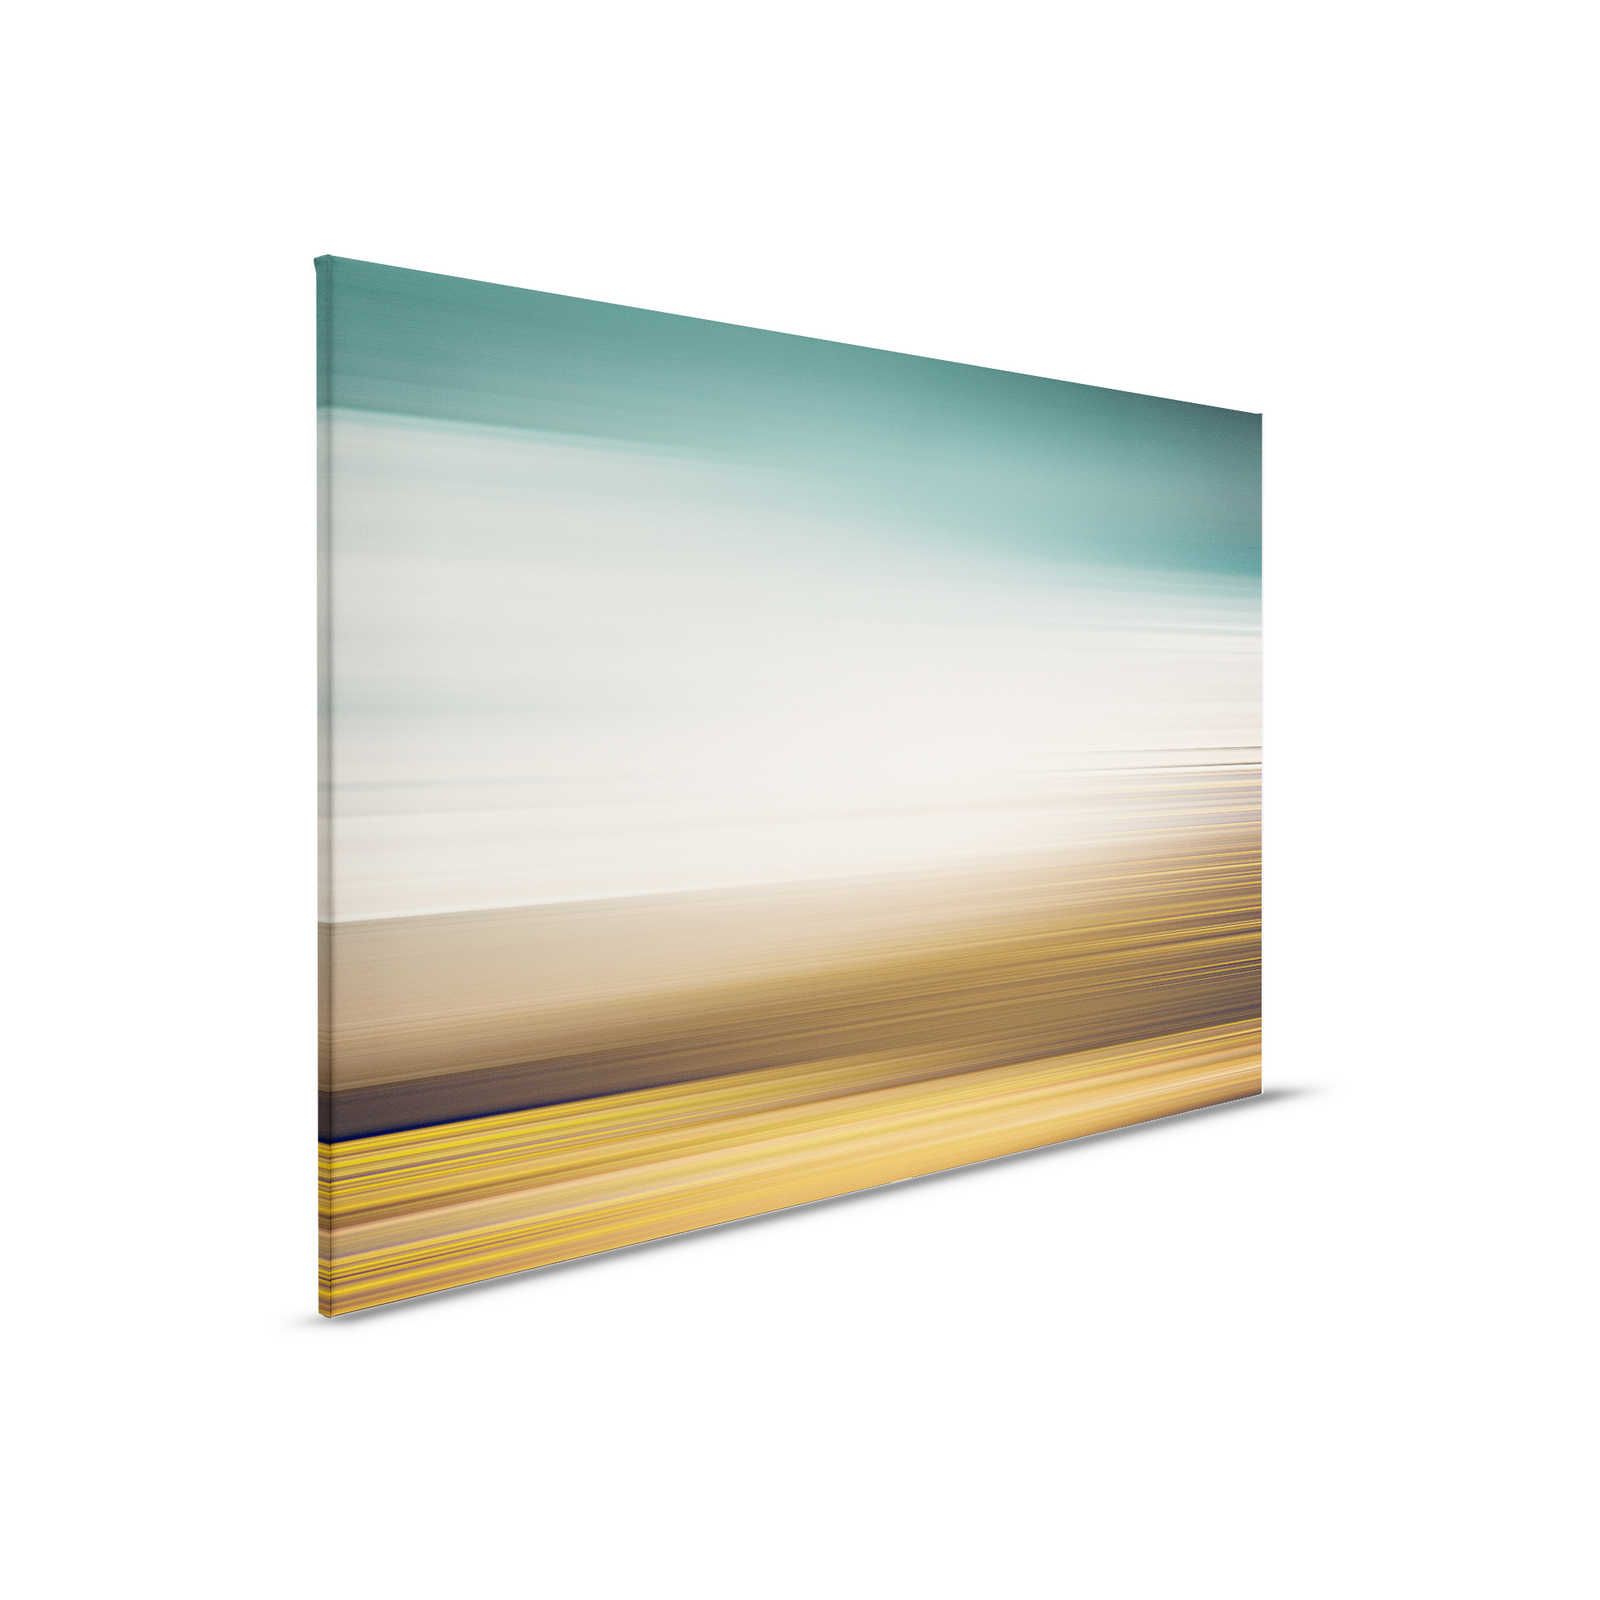         Horizon 3 - Leinwandbild Landschaft abstrakt mit Farbdesign – 0,90 m x 0,60 m
    